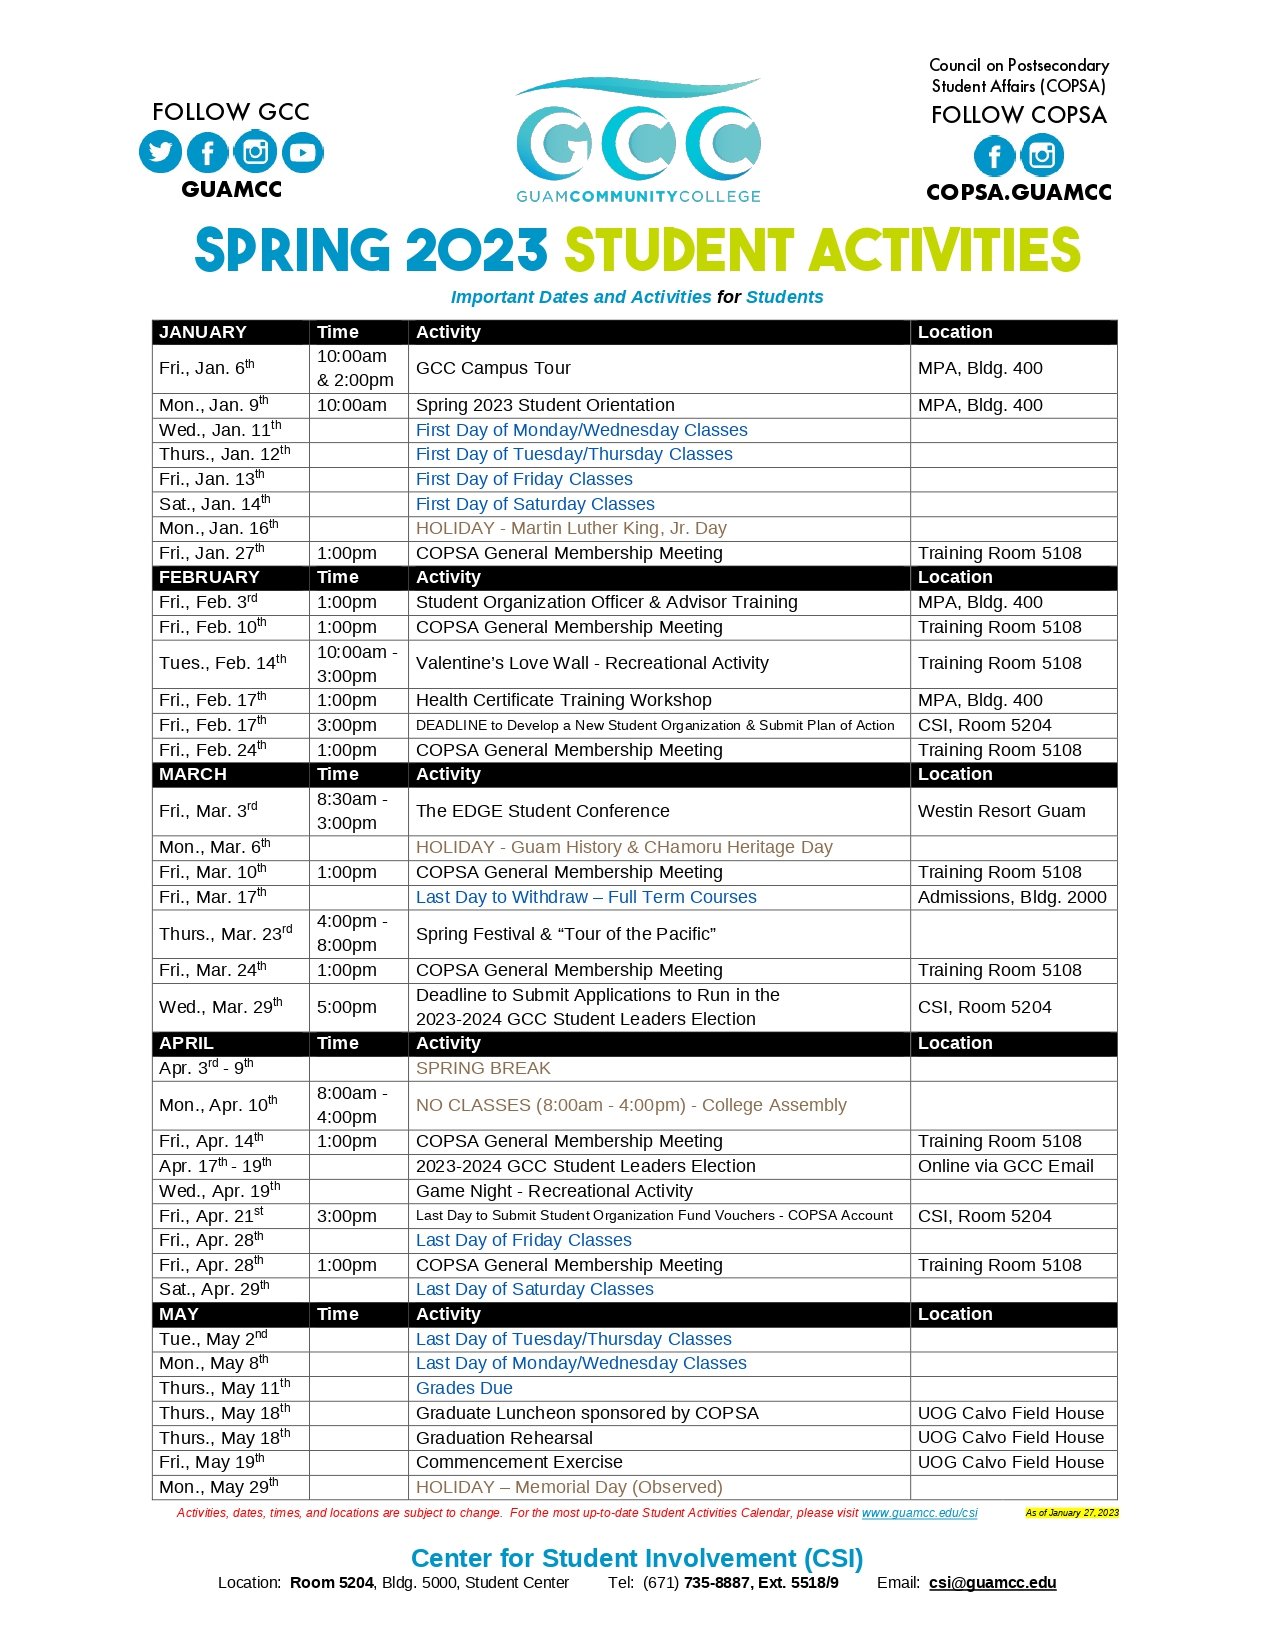 Spring 2023 Student Activities Calendar